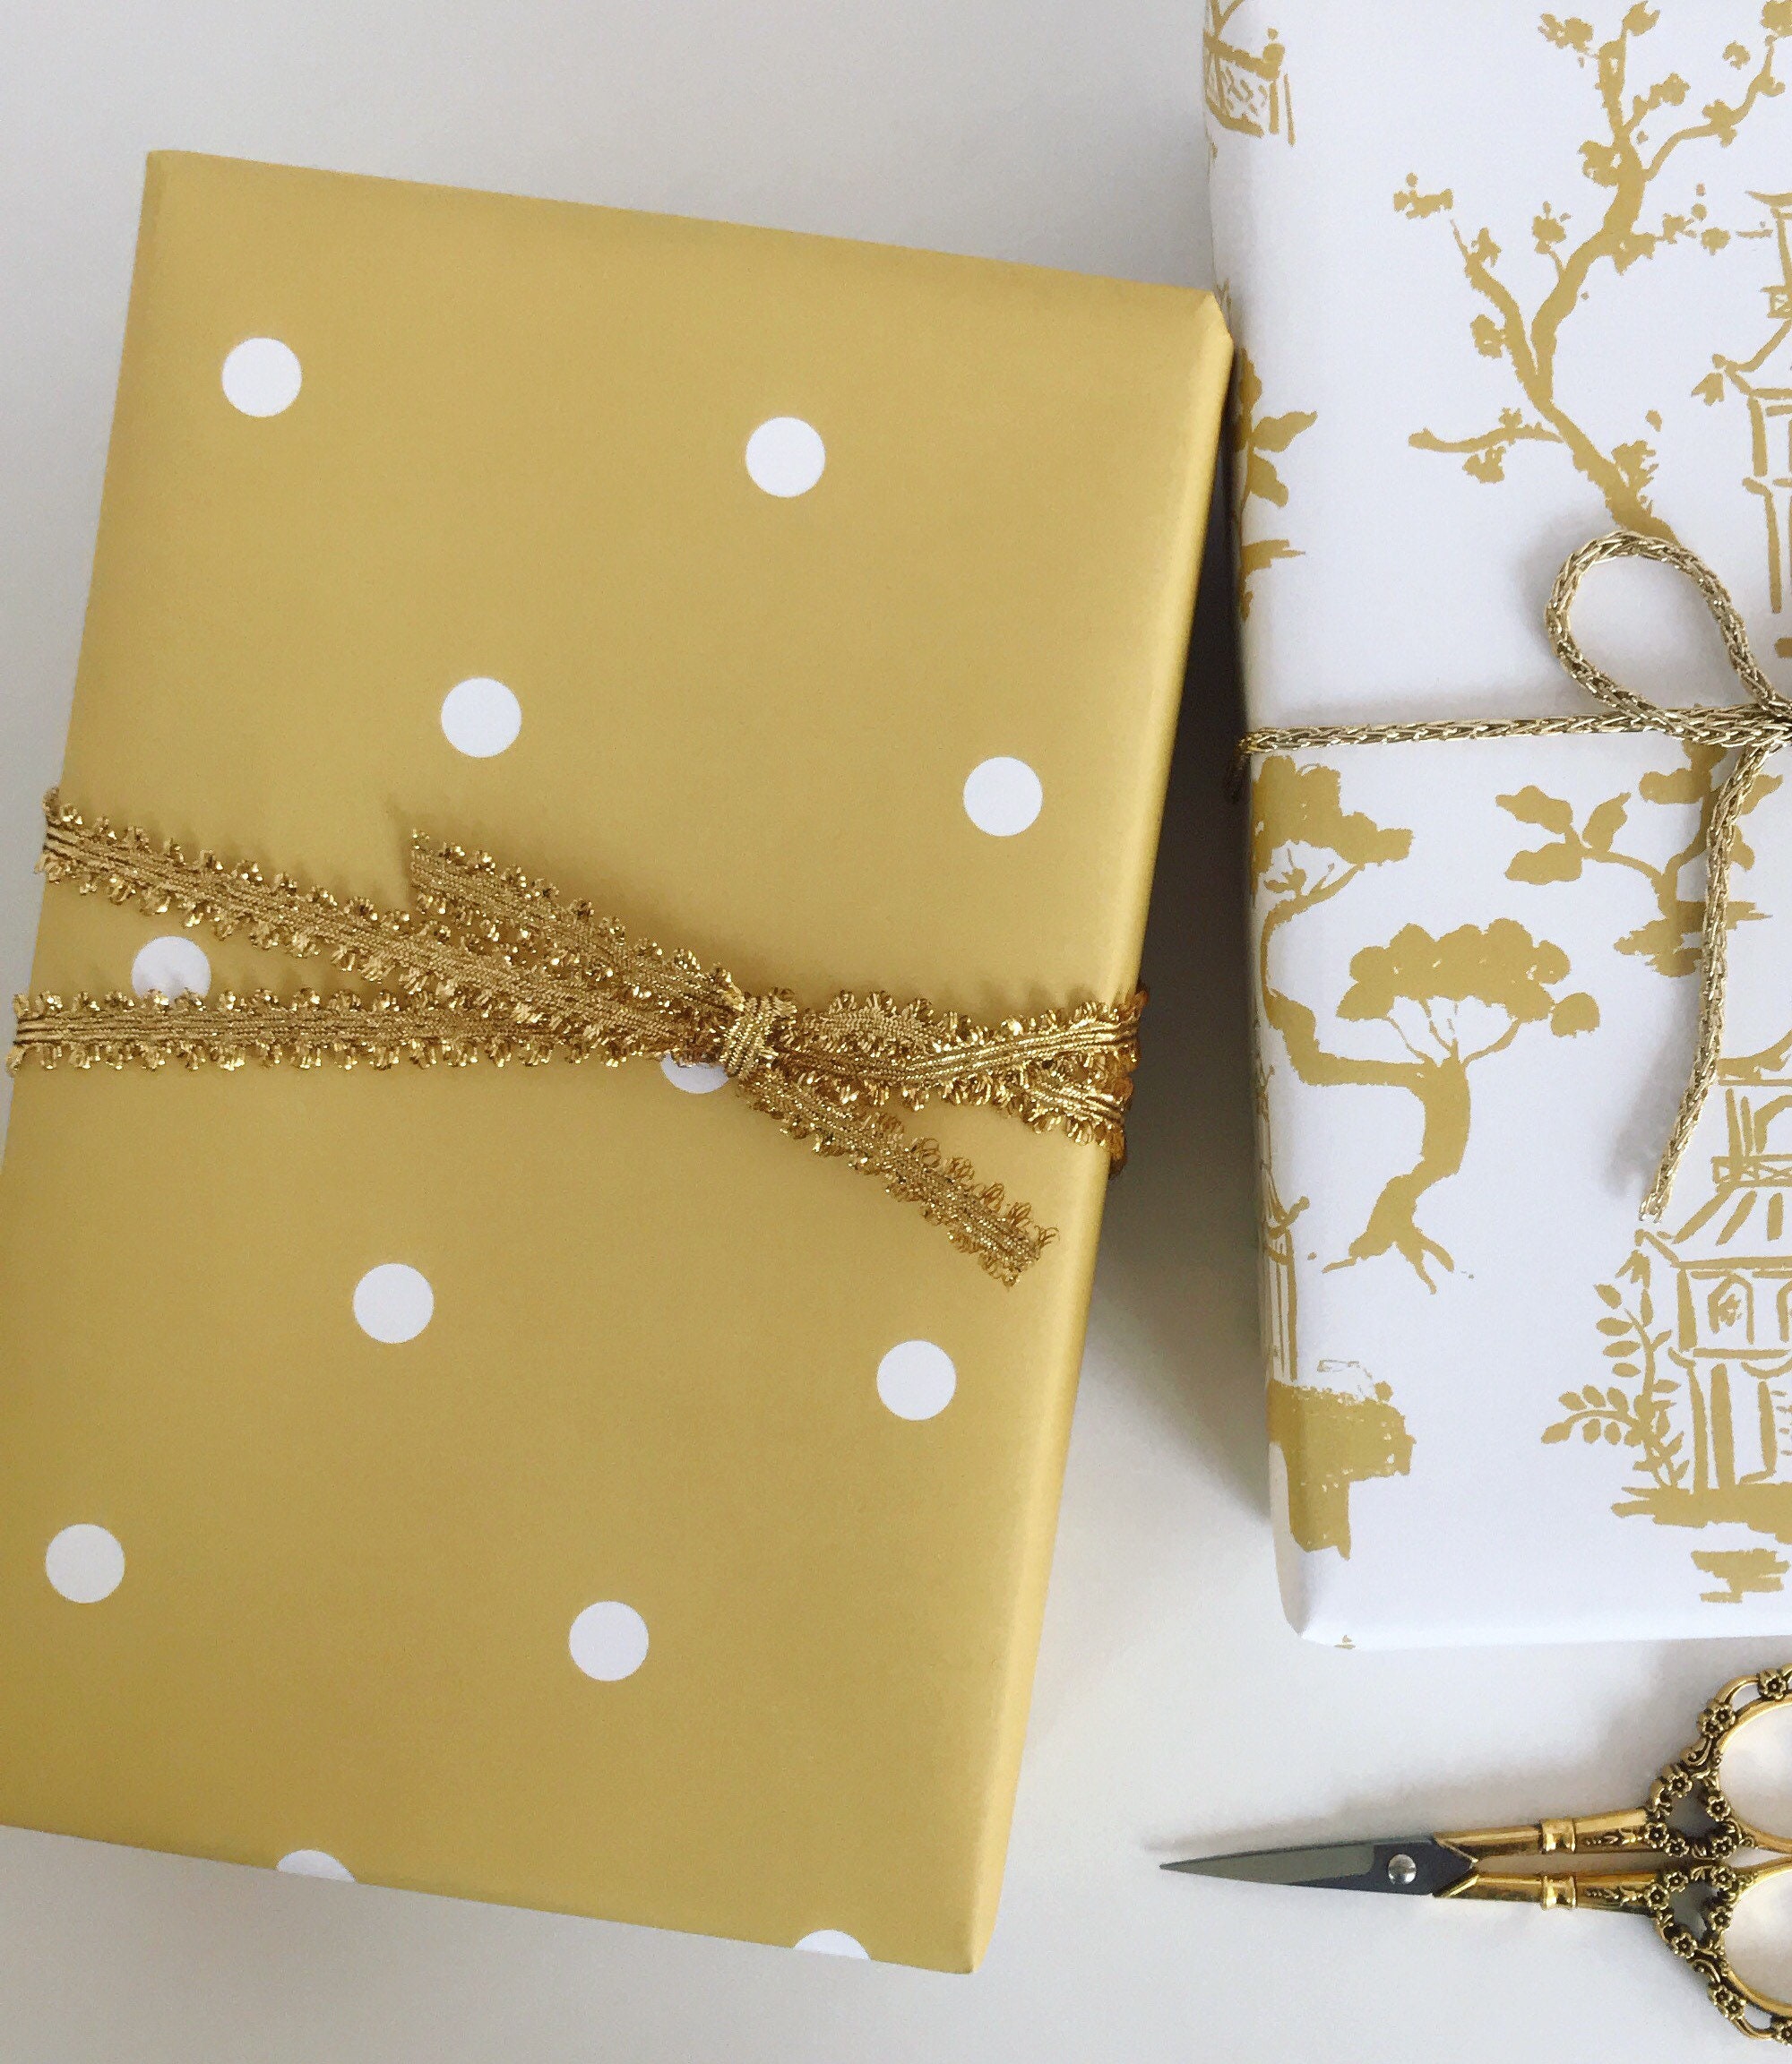 Gold Polka Dot Reversible Gift Wrap 24x417' Counter Roll